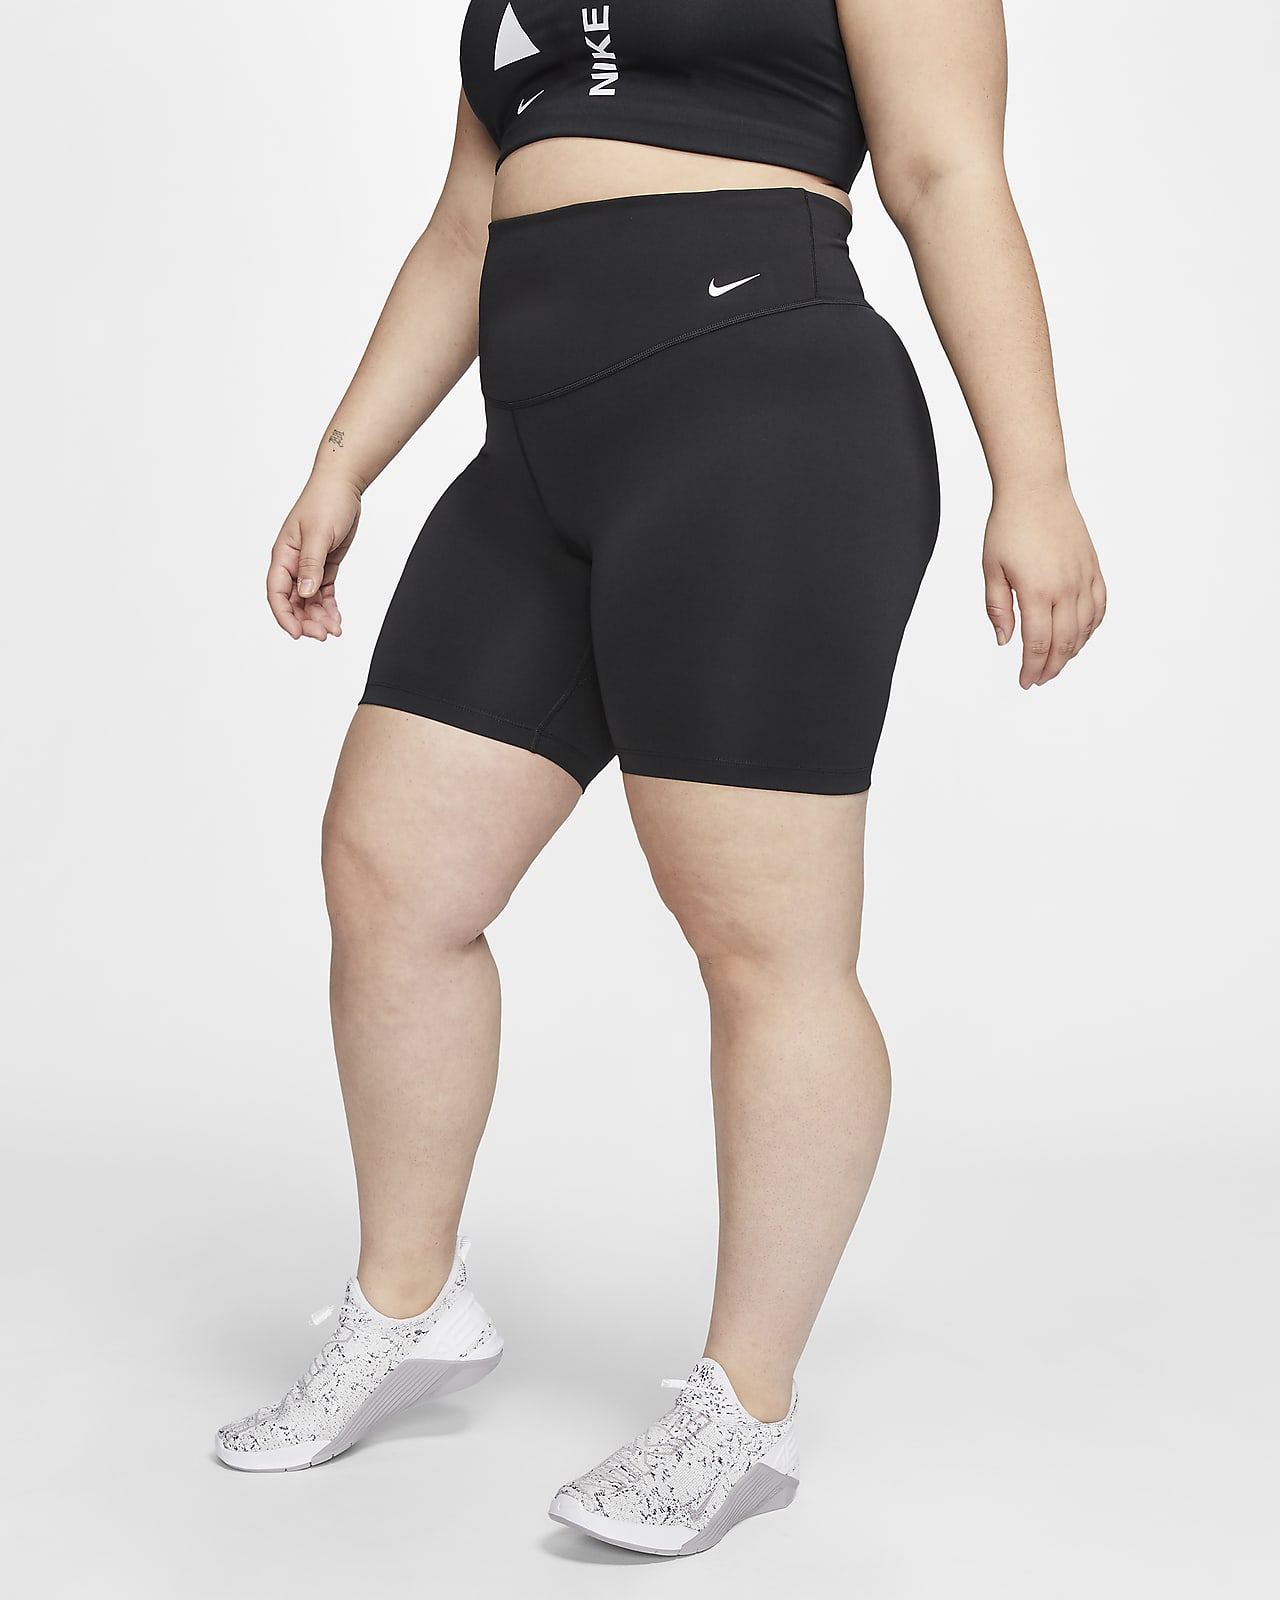 18cm (approx.) Shorts (Plus size). Nike NZ